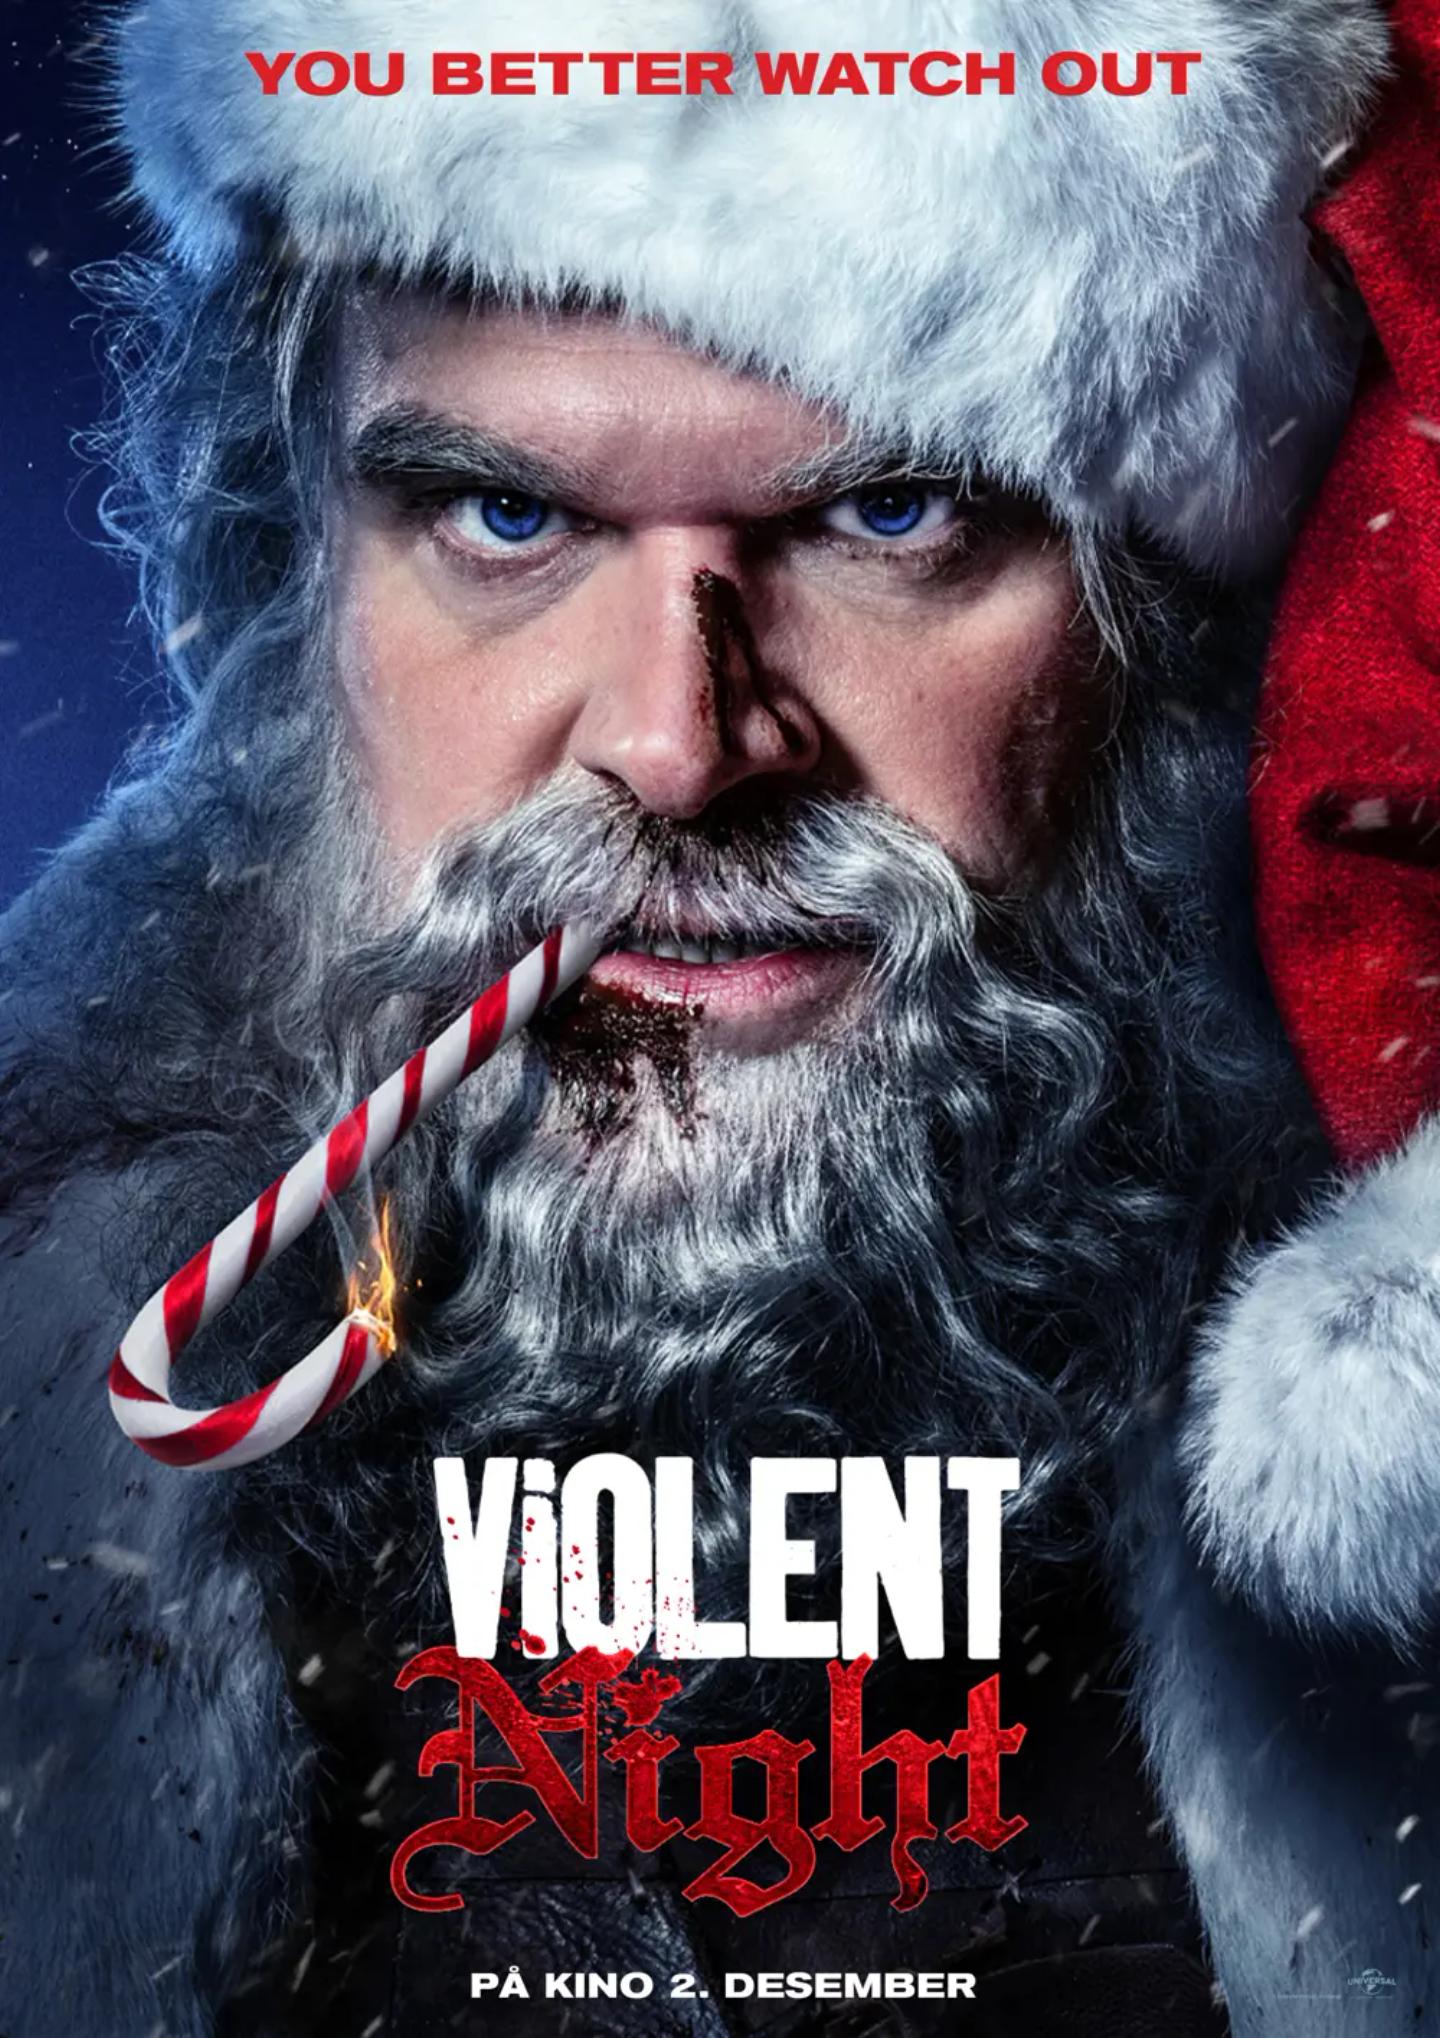 Plakat for 'Violent Night'